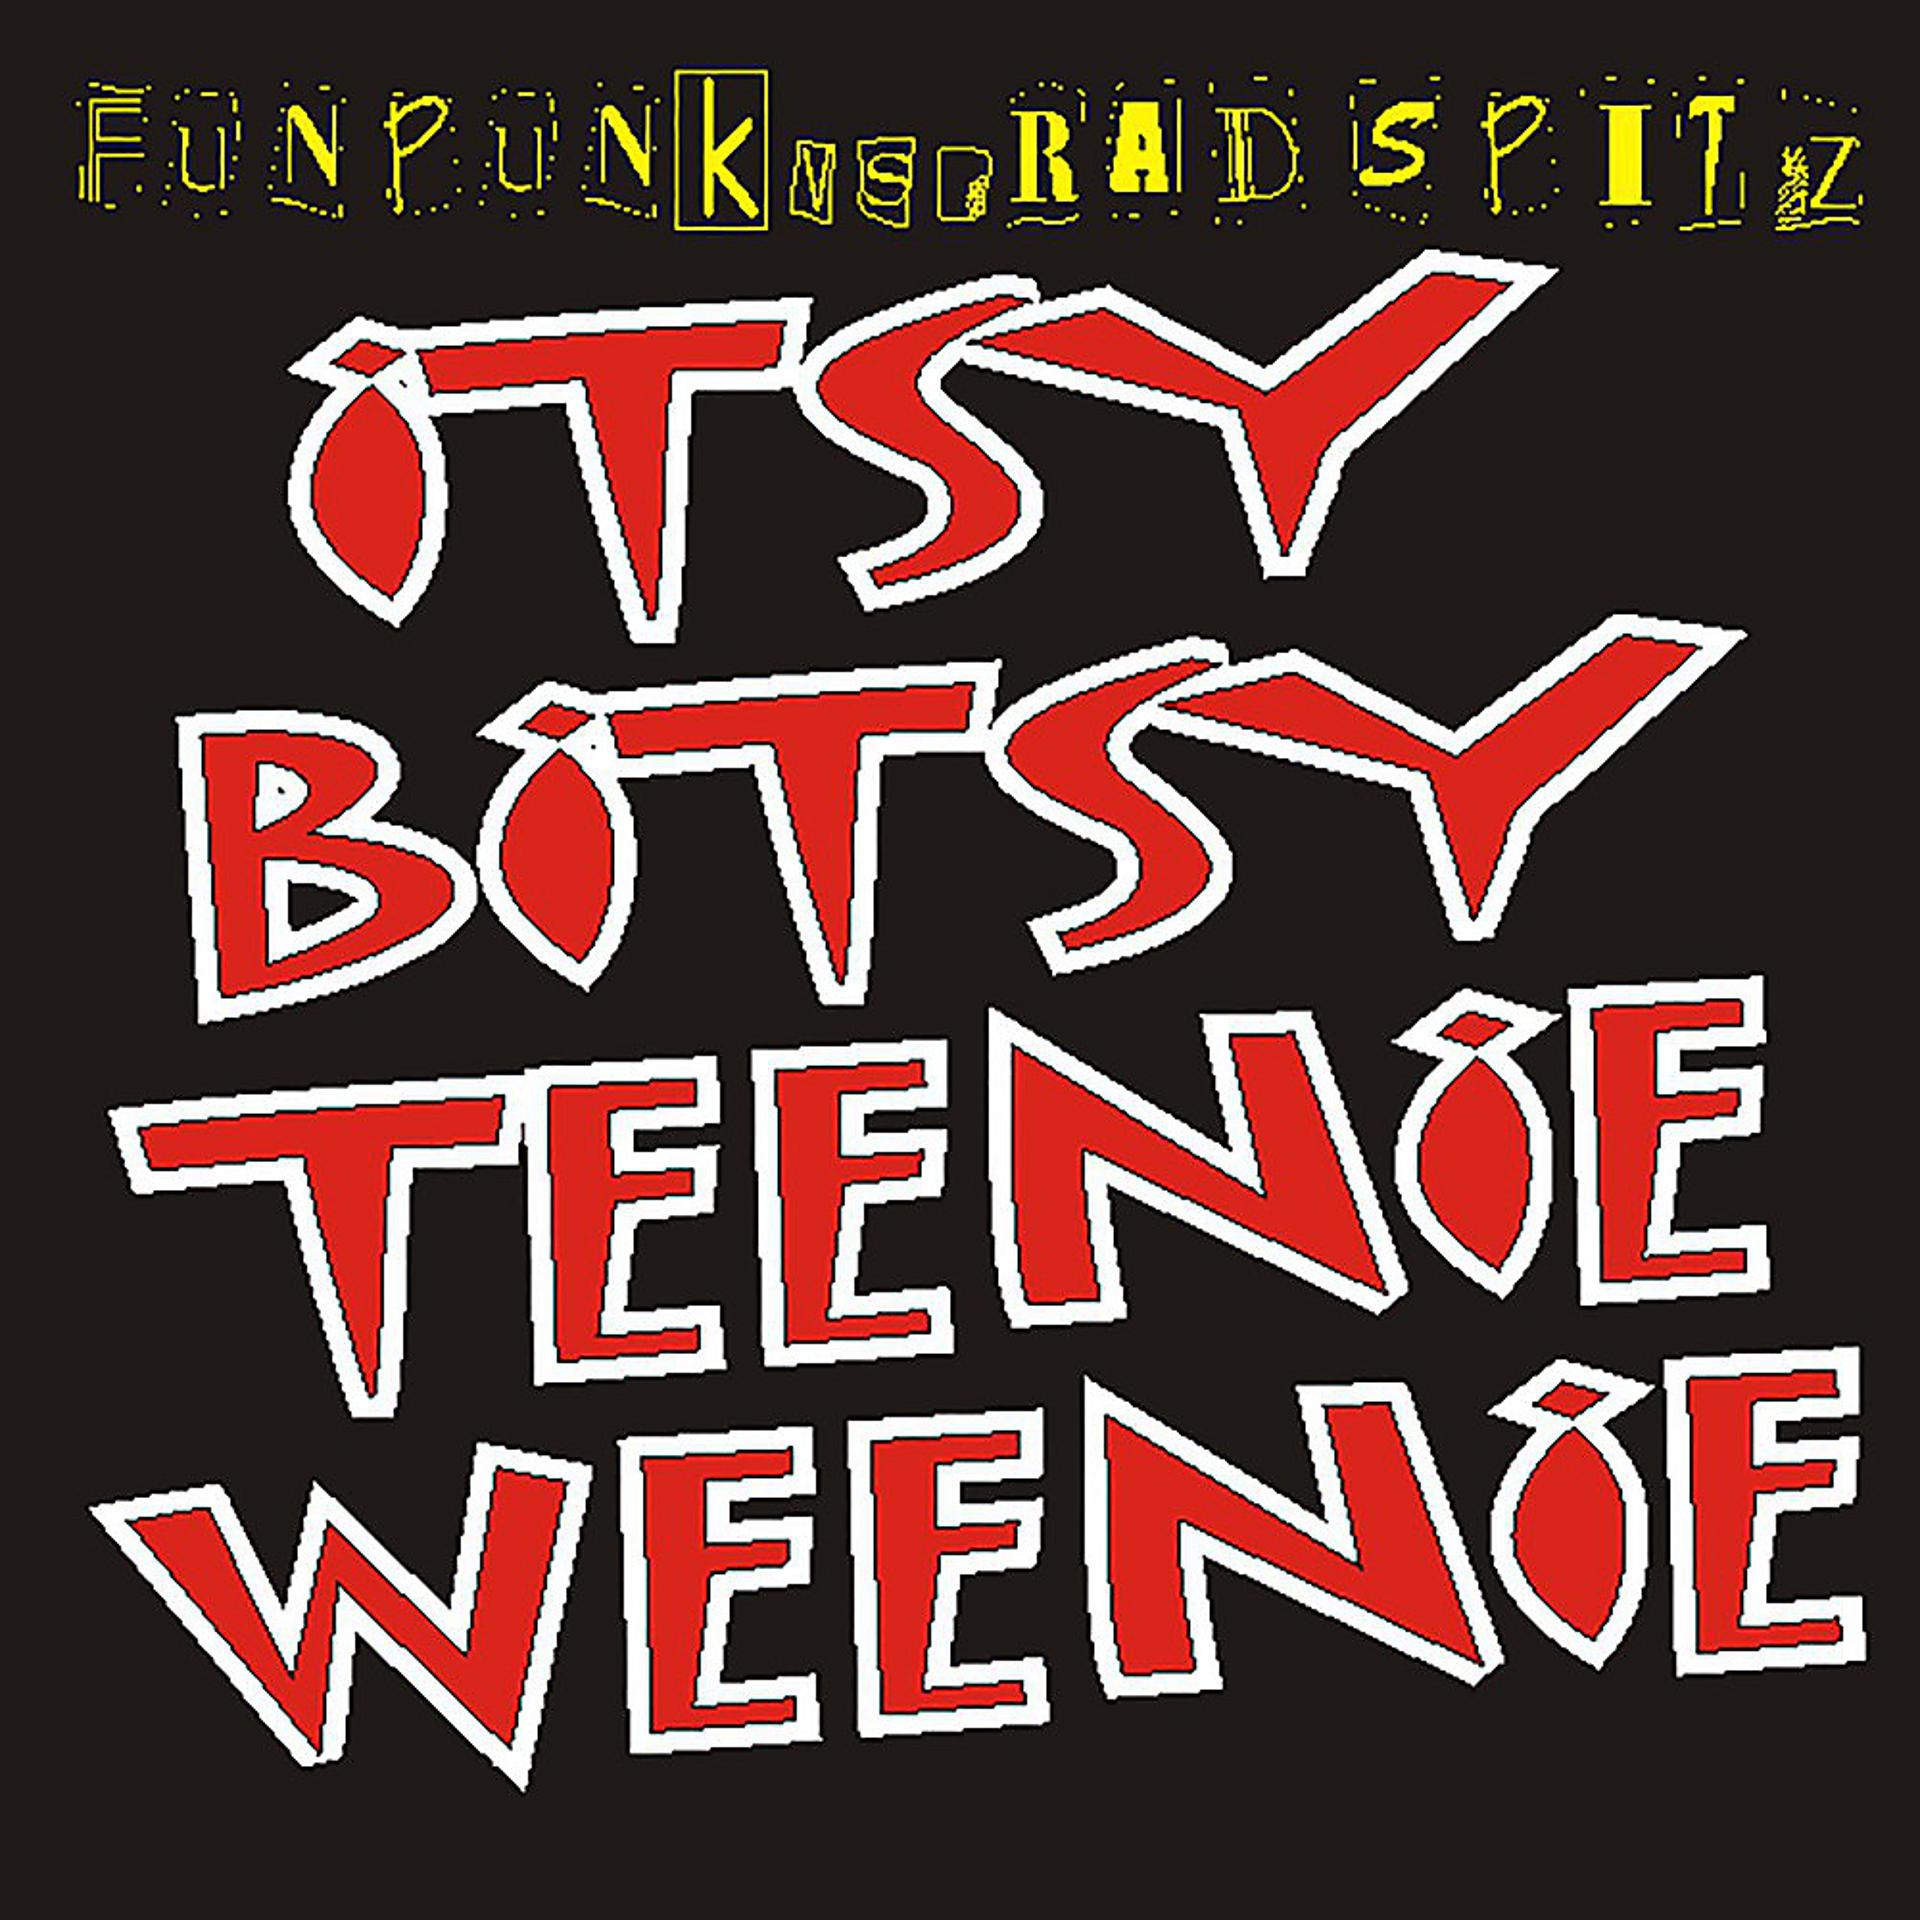 Постер альбома Itsy Bitsy Teenie Weenie Yellow Polka Dot Bikini